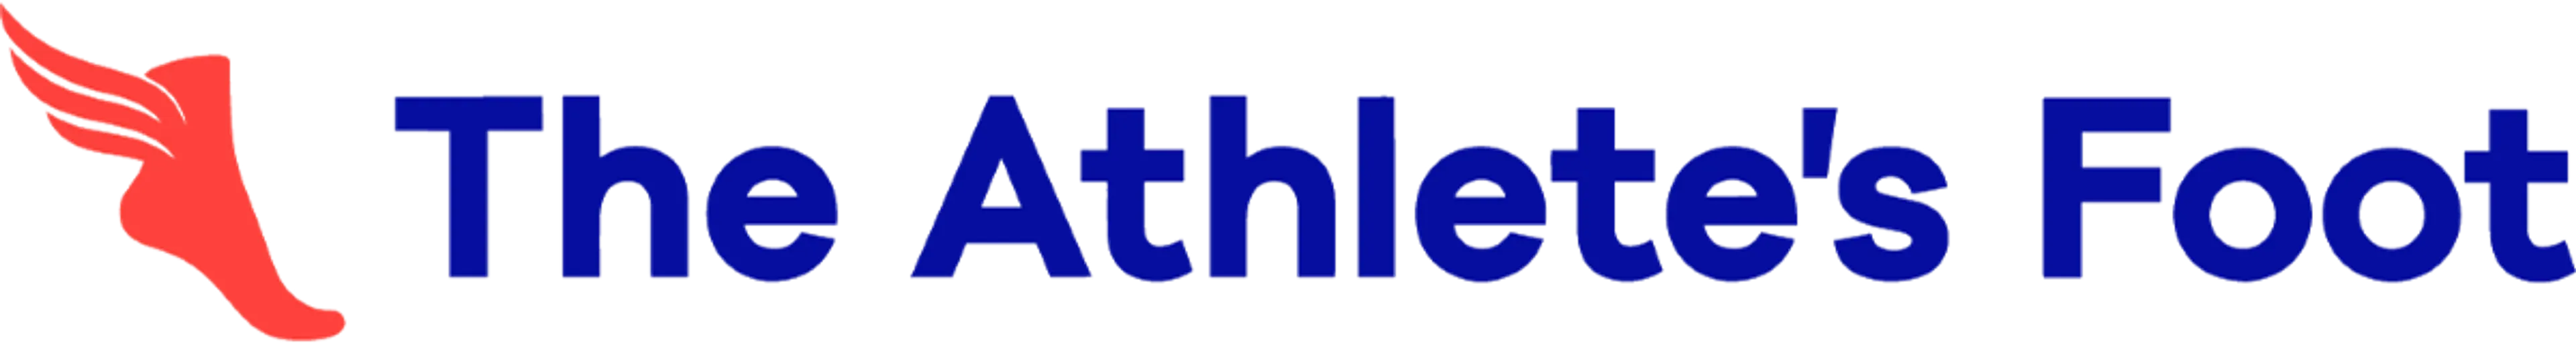 THE ATHLETE'S FOOT logo